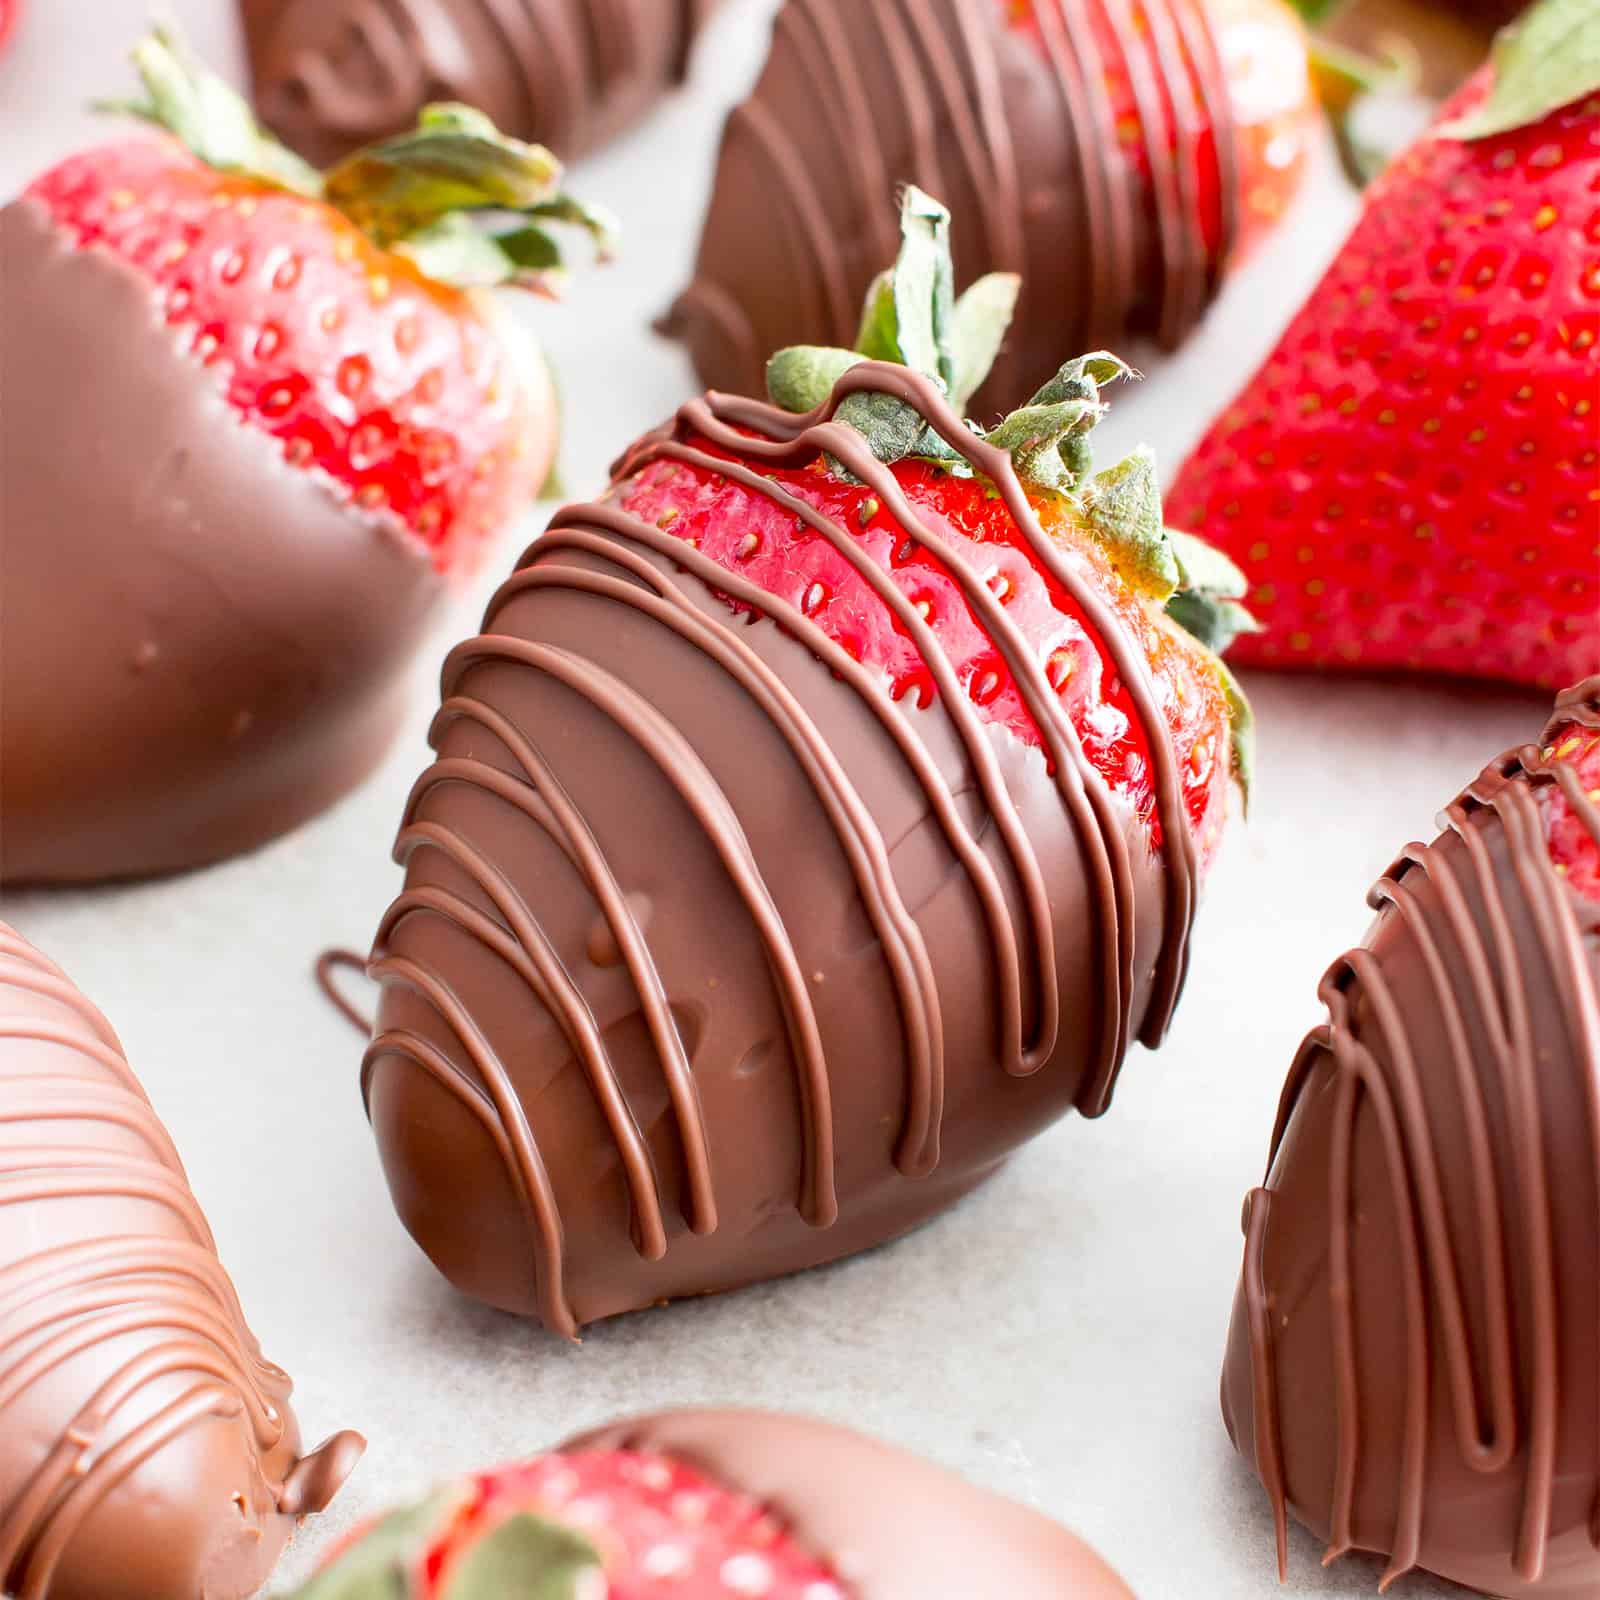 How to Make Chocolate Dipped Strawberries Recipe (Vegan ...